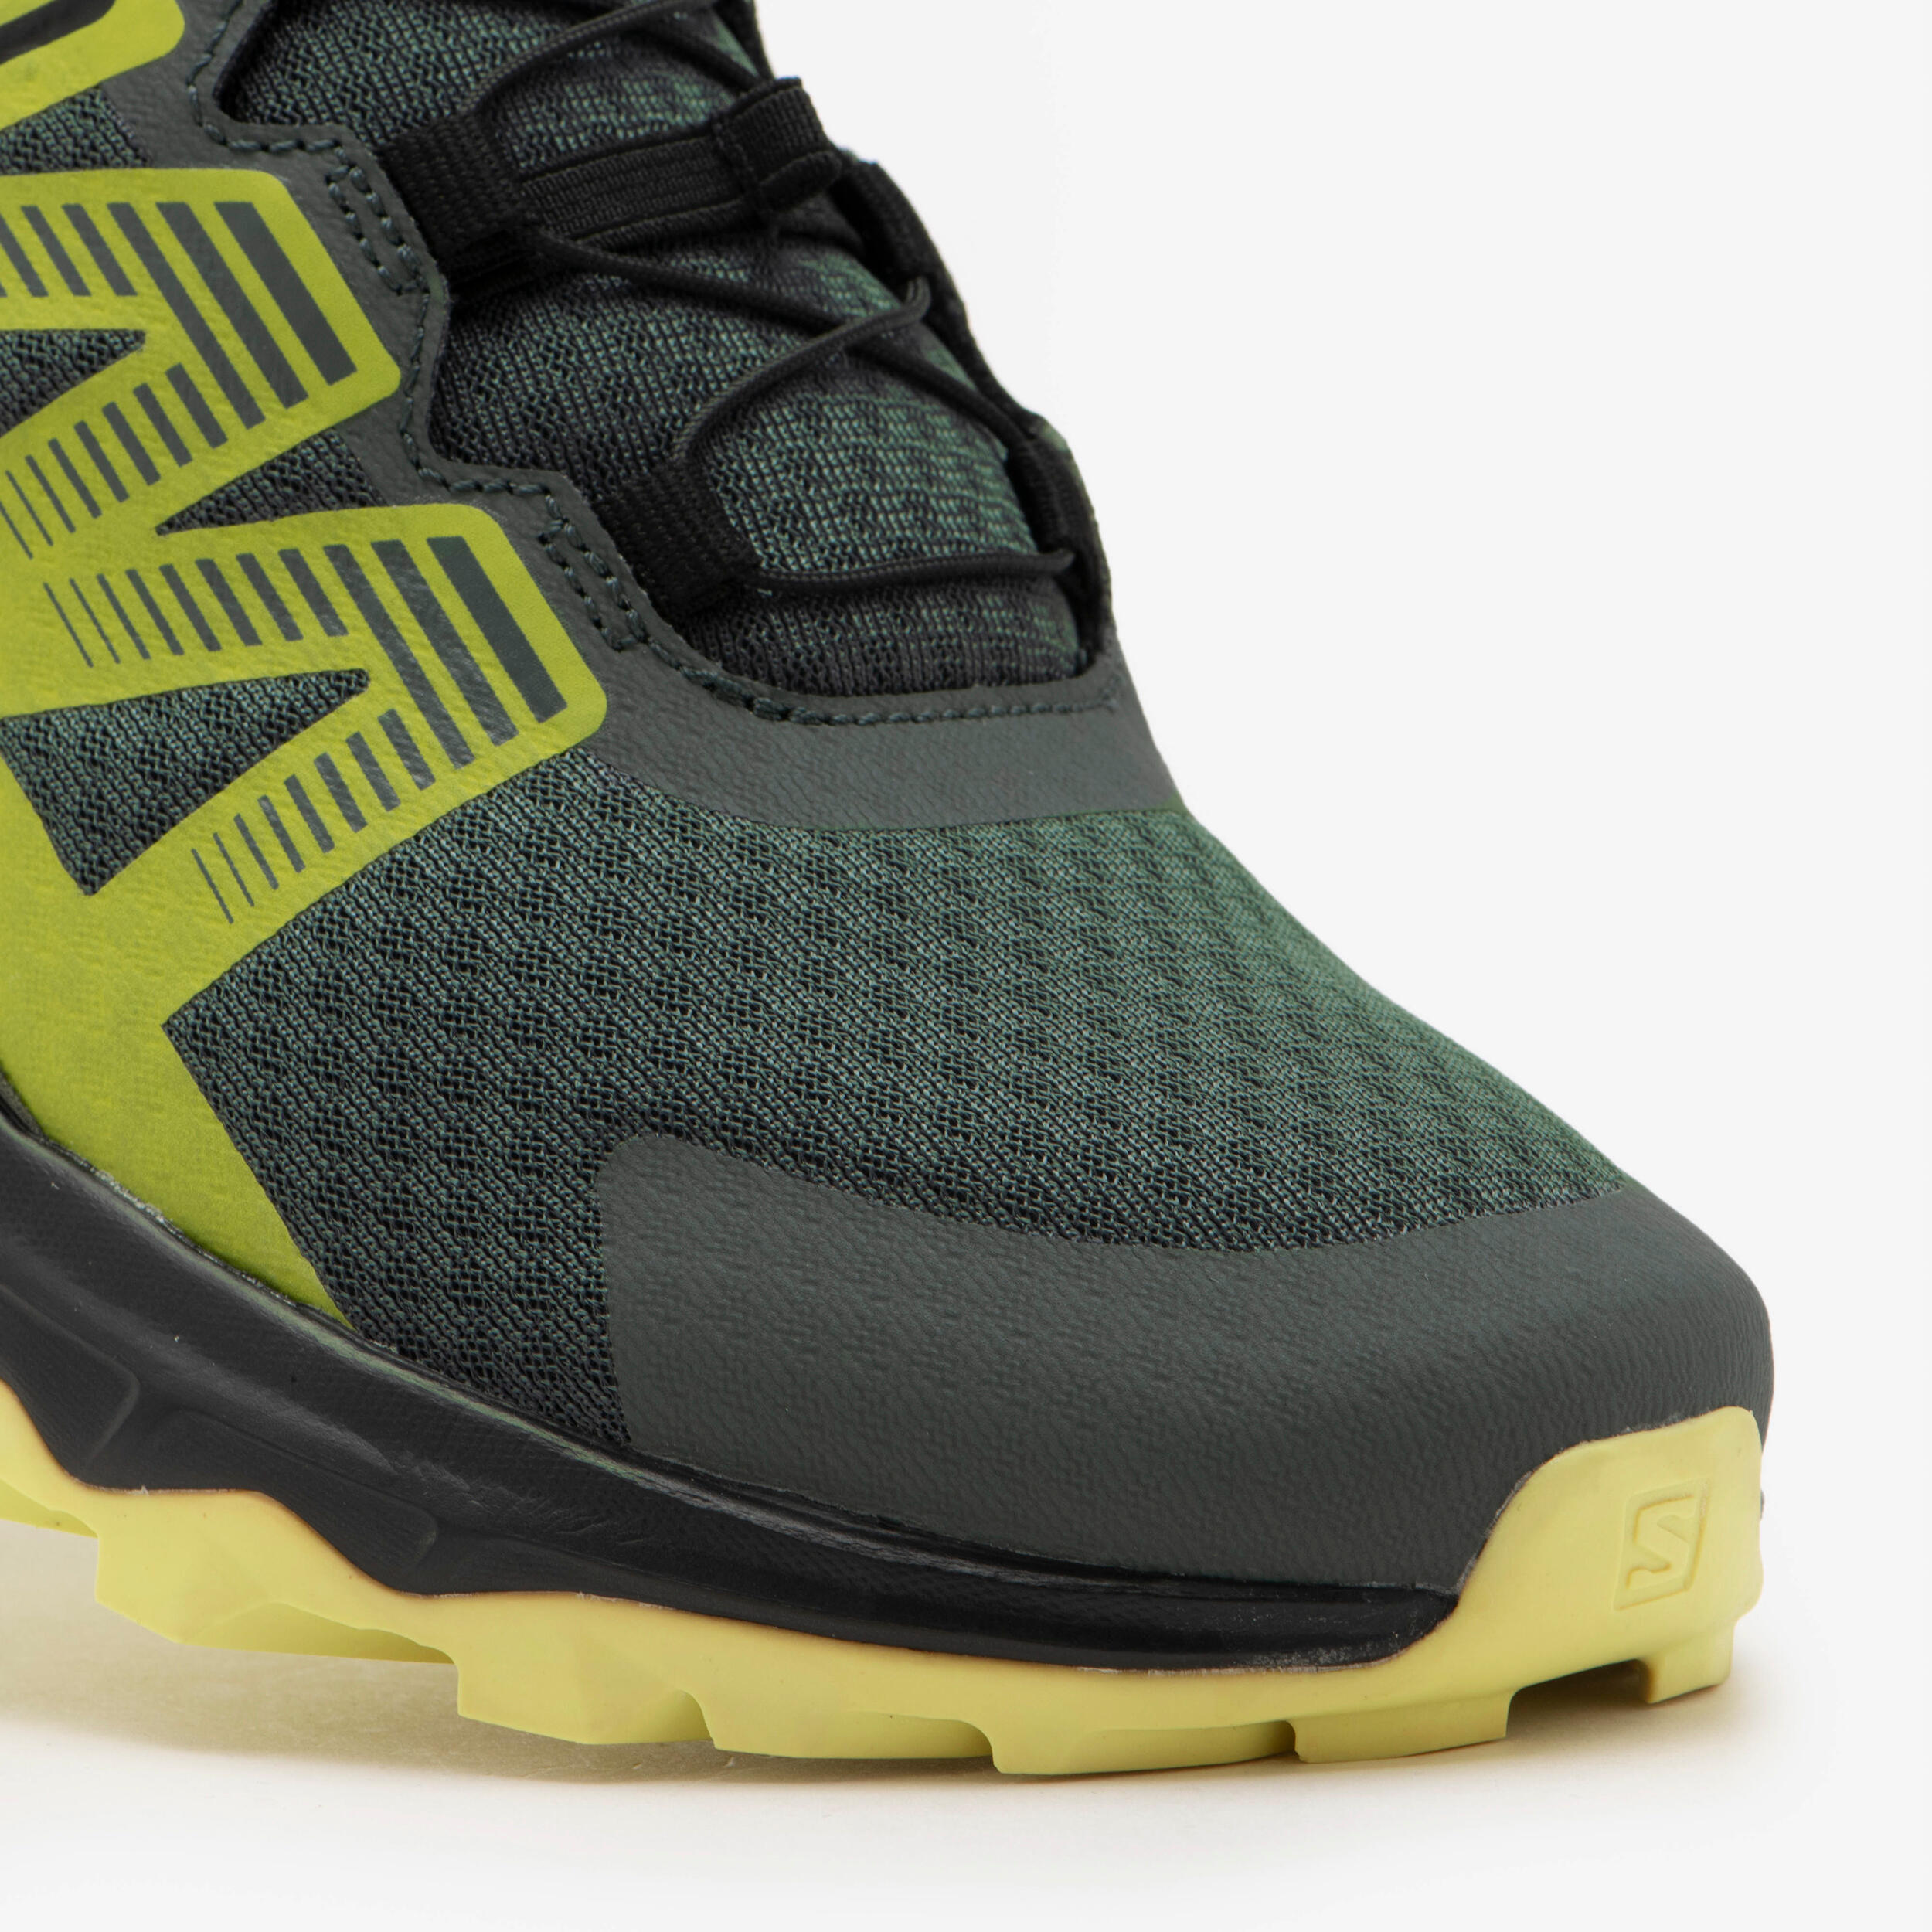 Men's SUPERA TRAIL 3 Trail Running Shoes - Black/Yellow 6/7